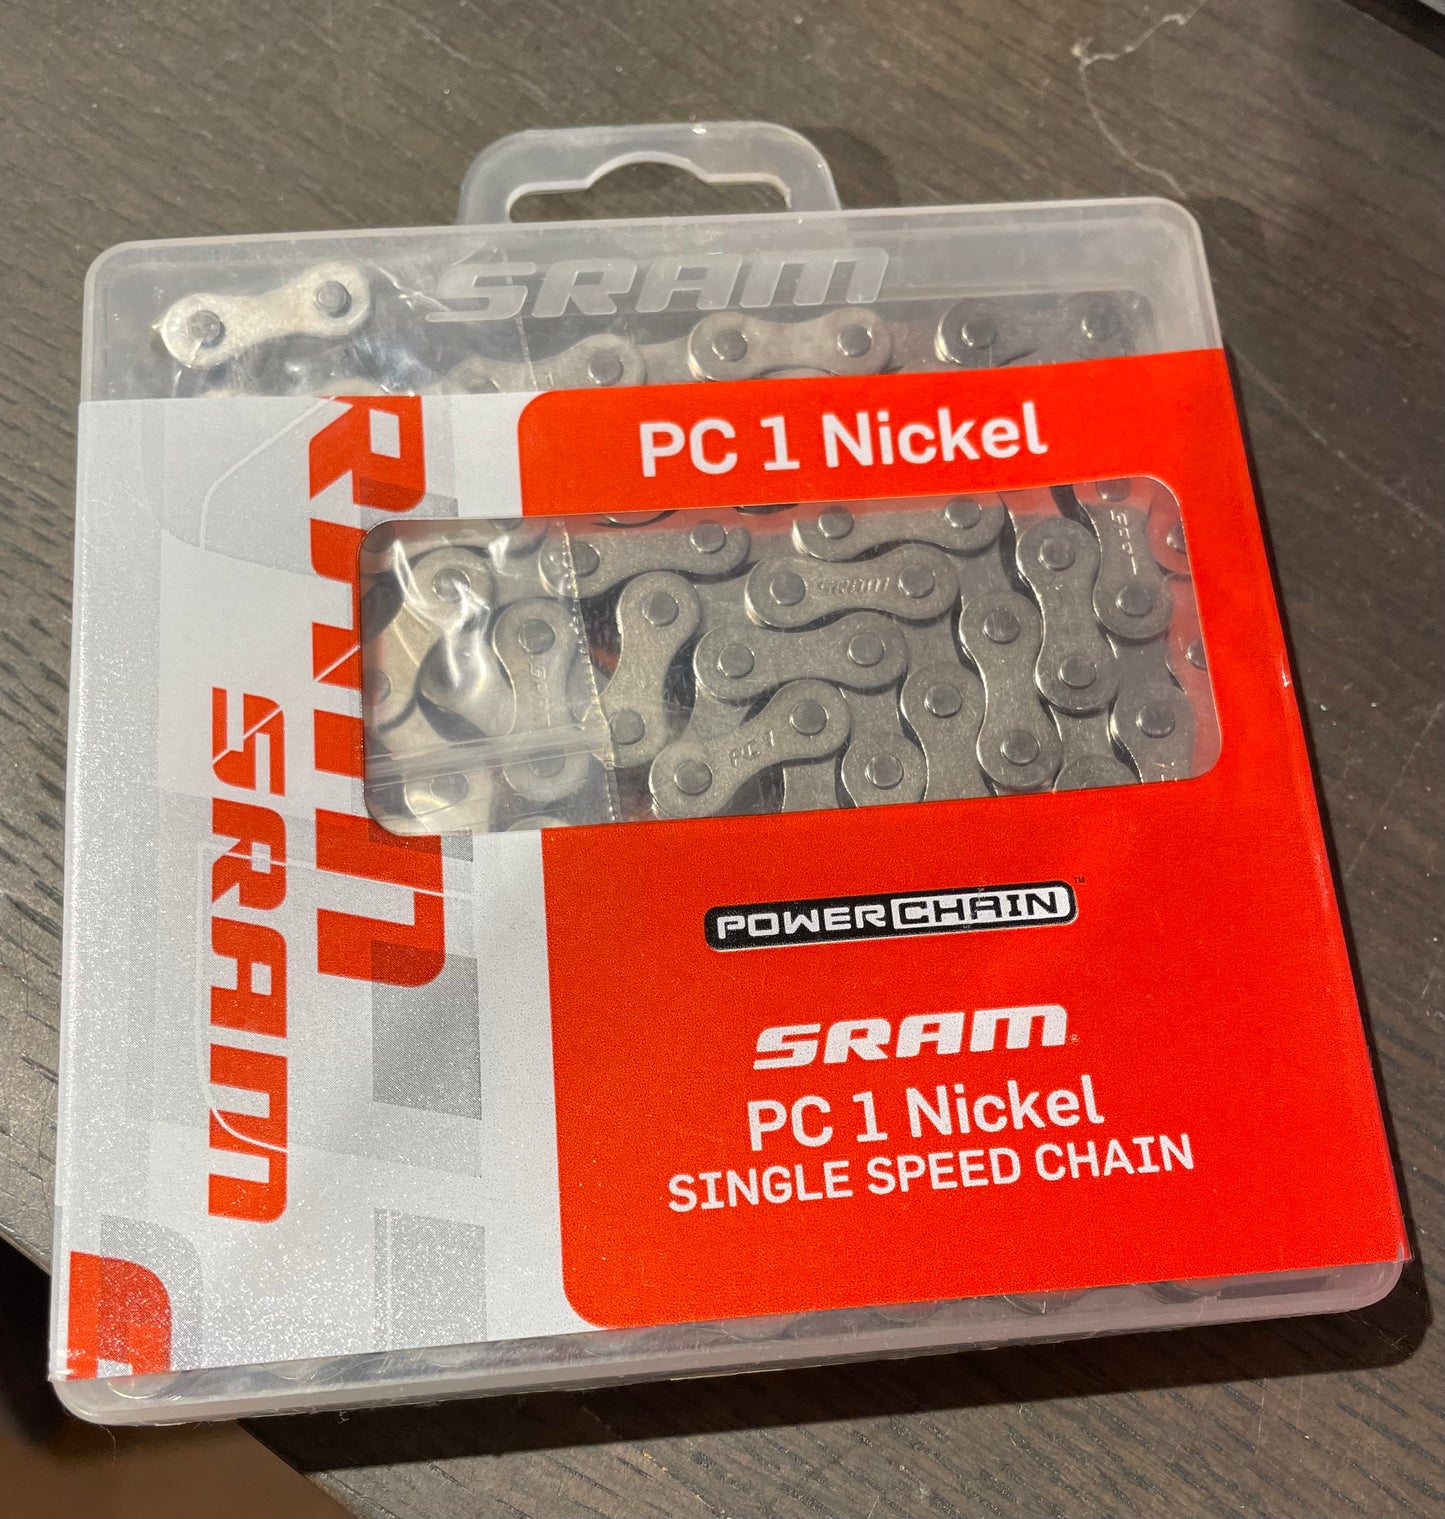 Single Speed Bike Chain -SRAM - PC1 Nickel - 1/2” x 1/8 “ - BHI